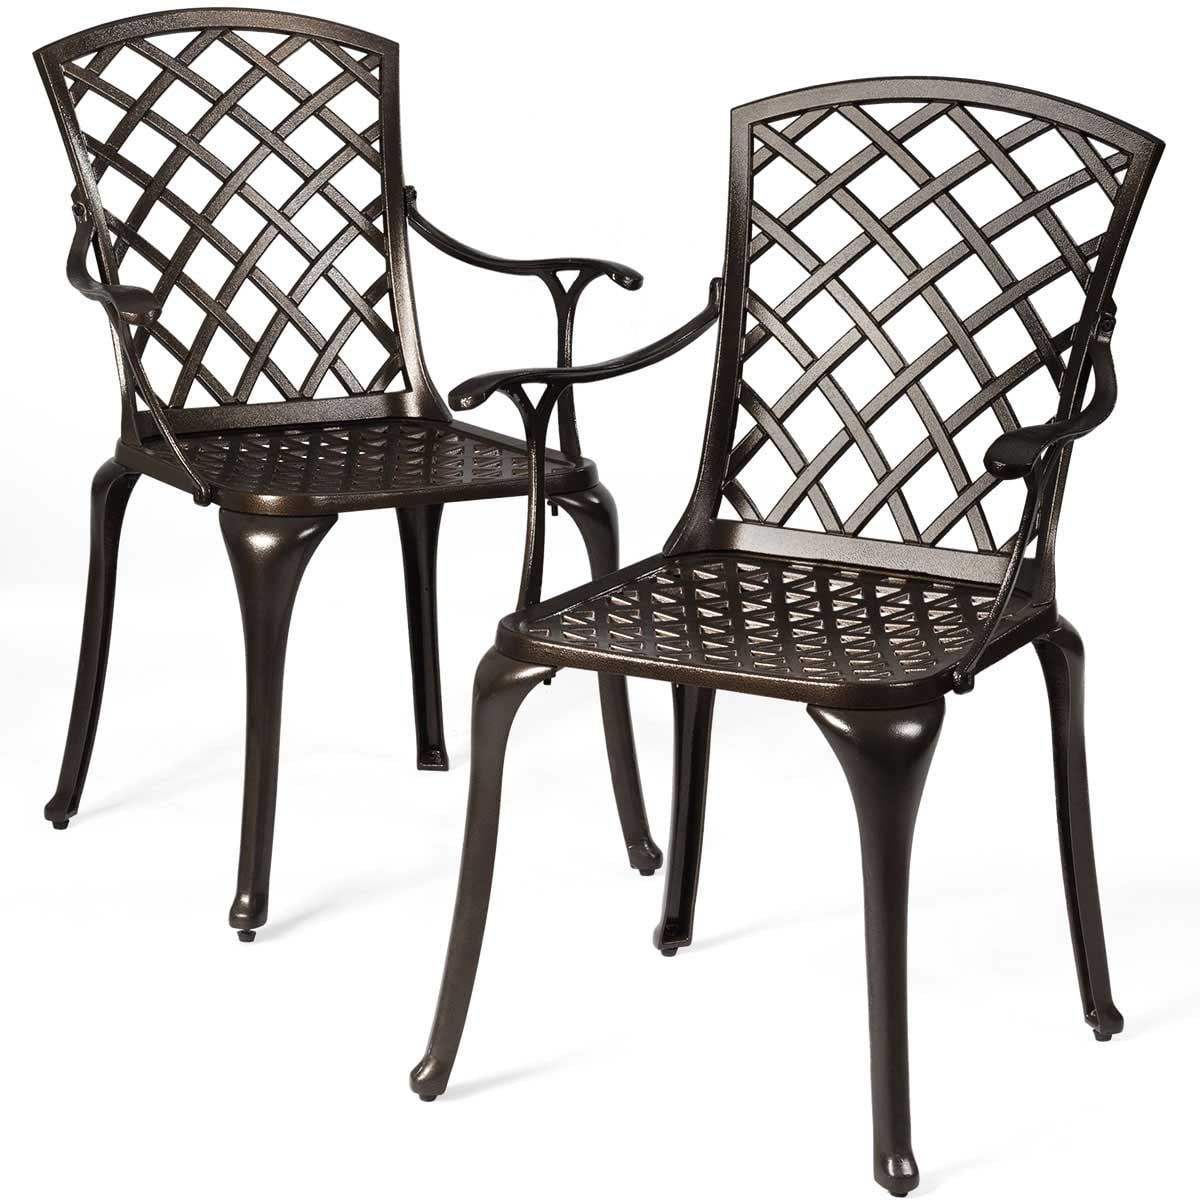 Top 2 Pcs Cast Aluminum Dining Chair, Black Cast Aluminum Outdoor Dining Chairs